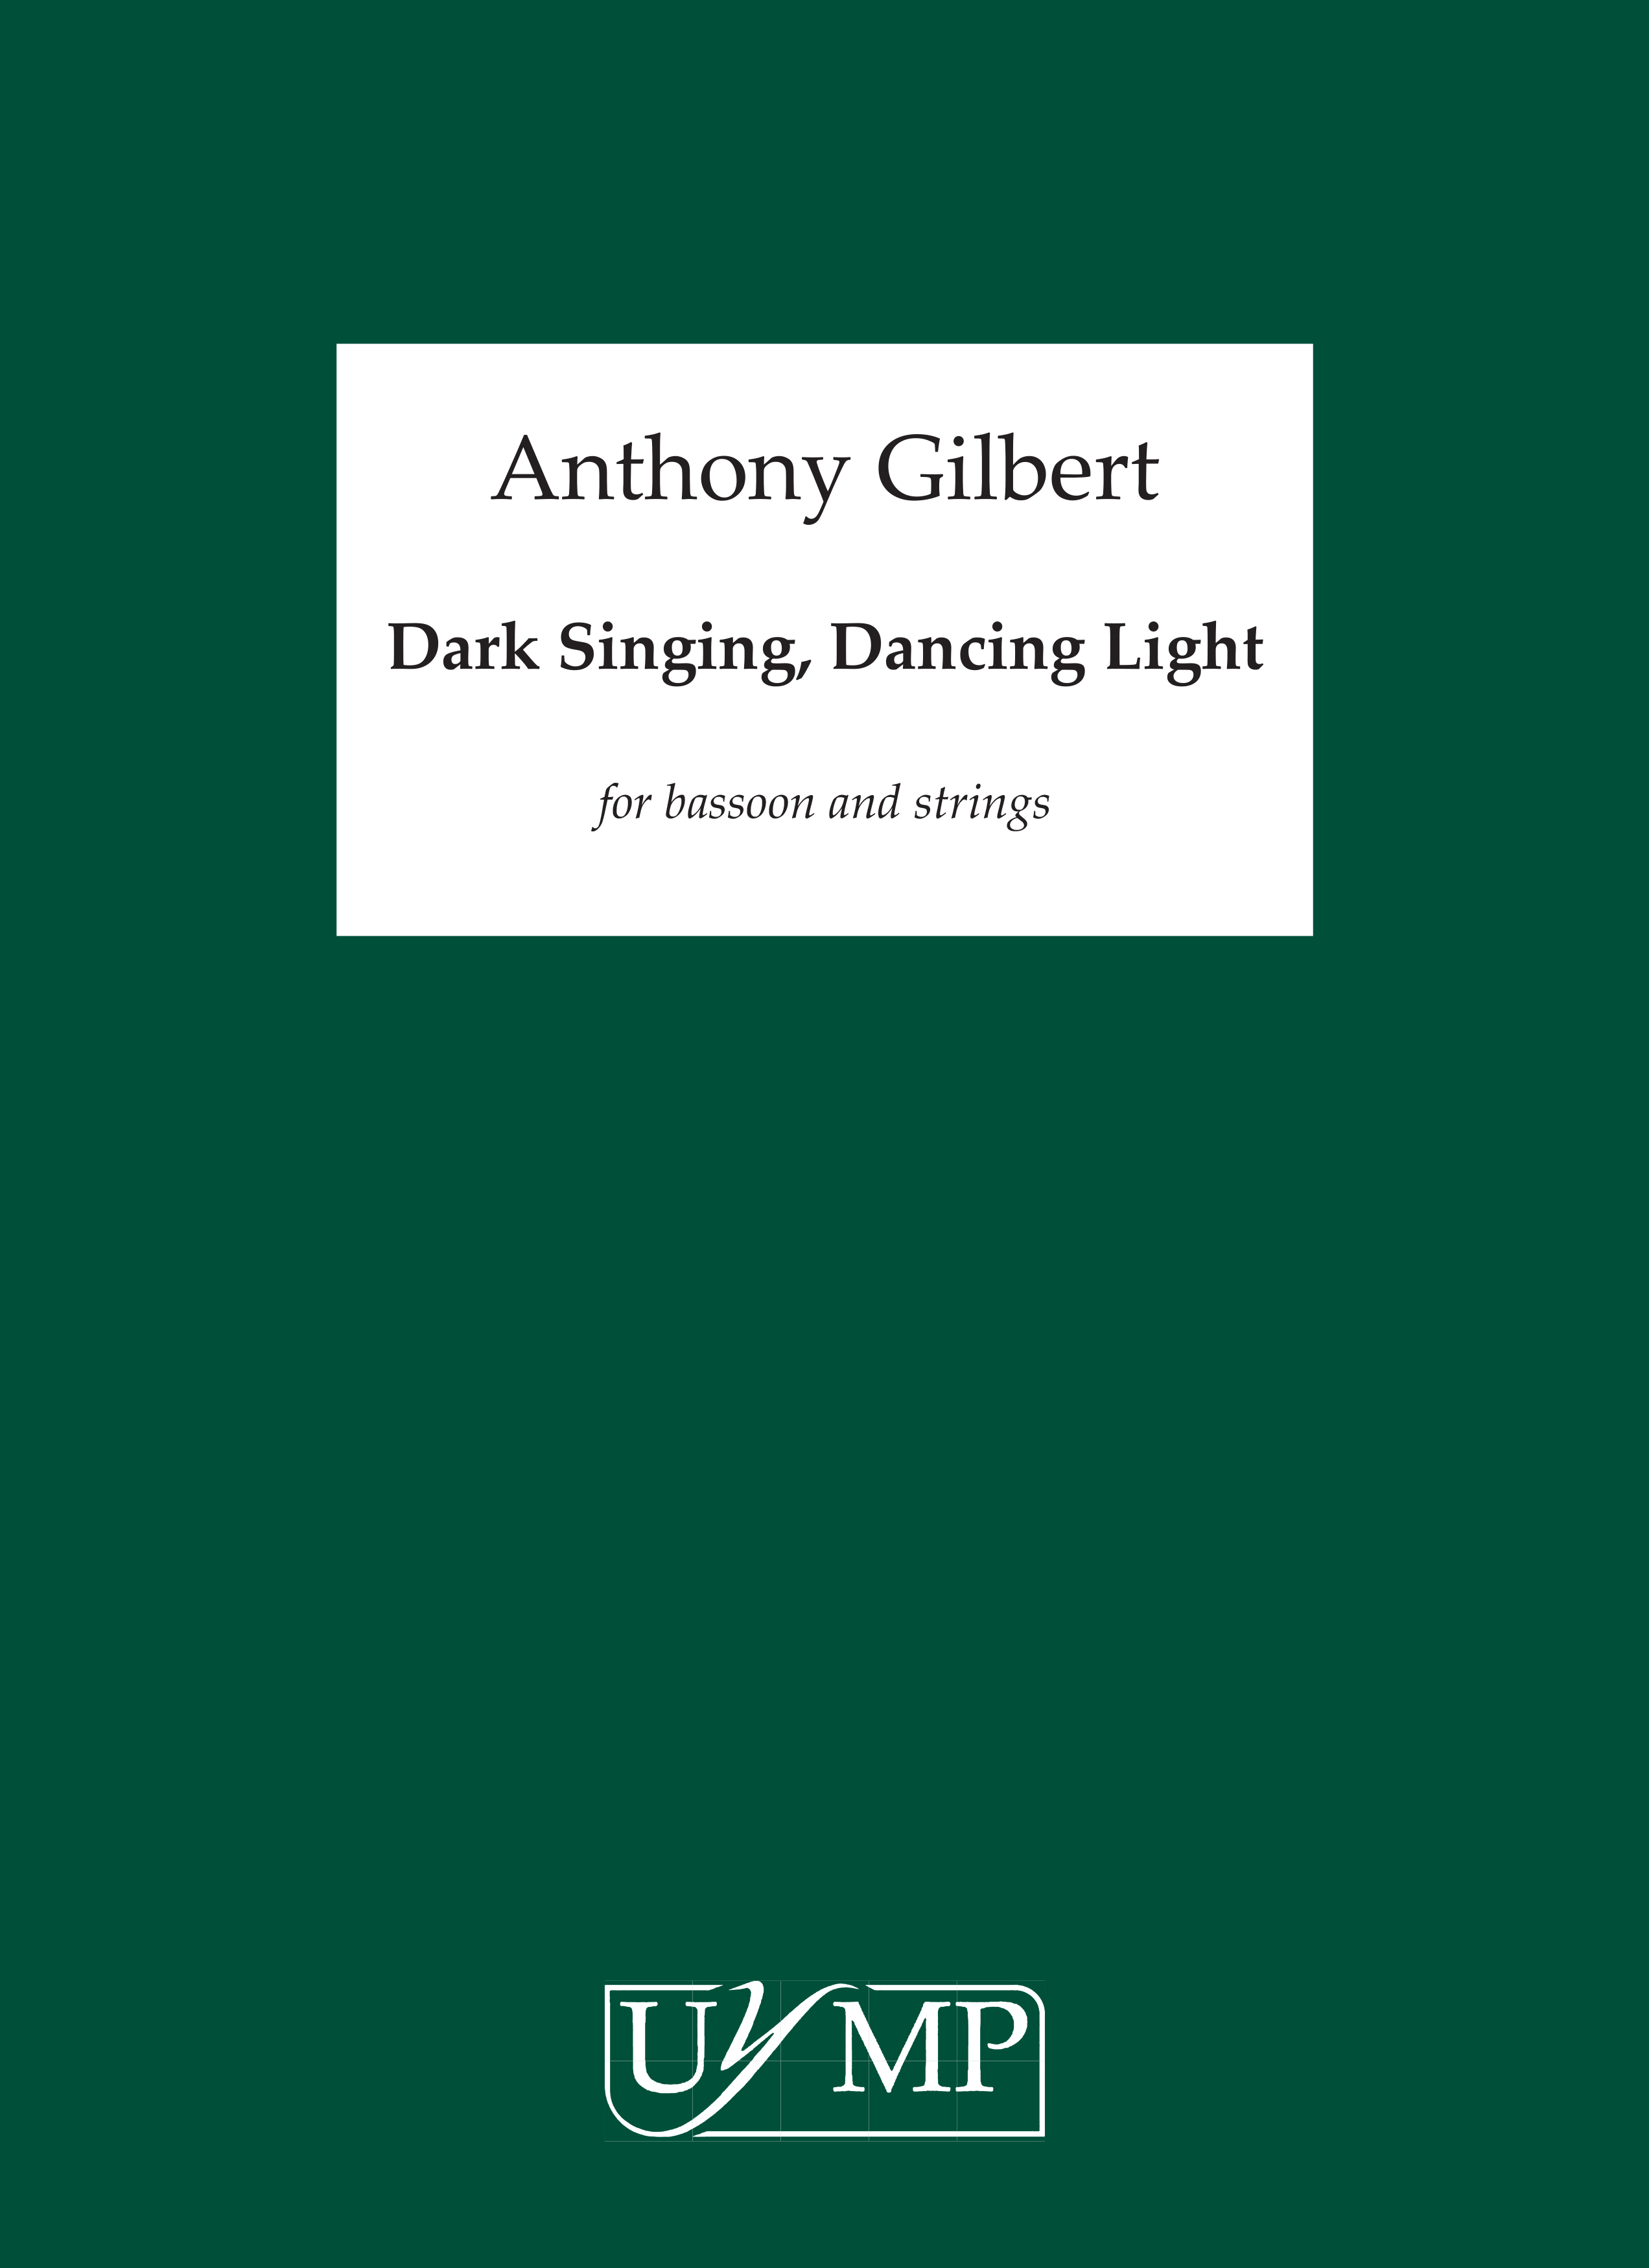 Anthony Gilbert: Dark Singing, Dancing Light